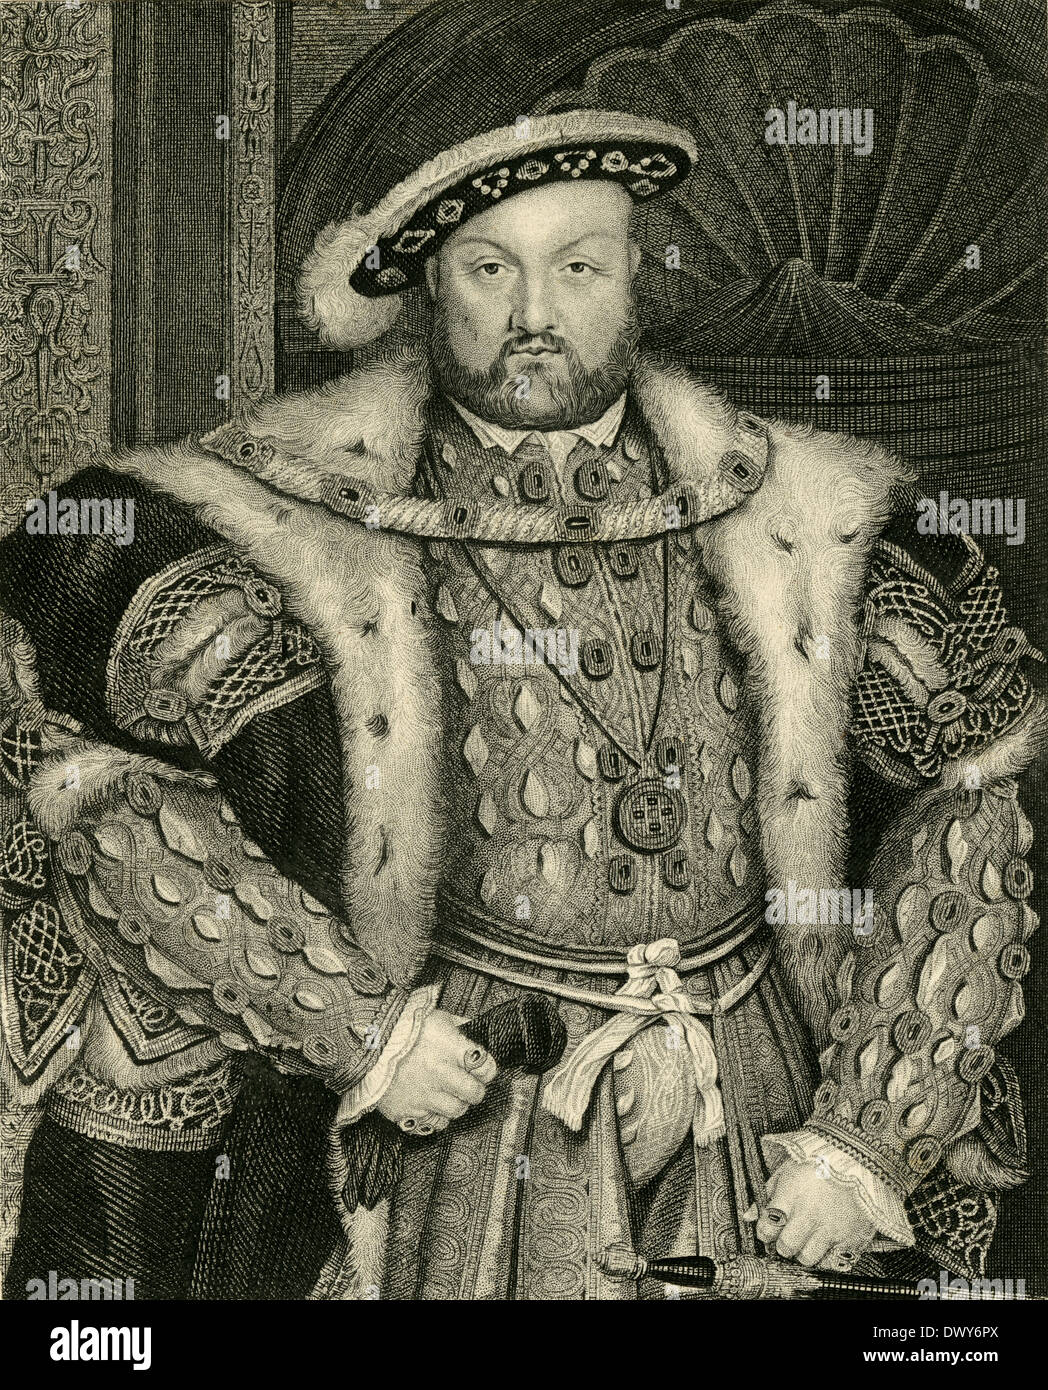 Antique circa 1880 engraving, King Henry VIII of England. Stock Photo